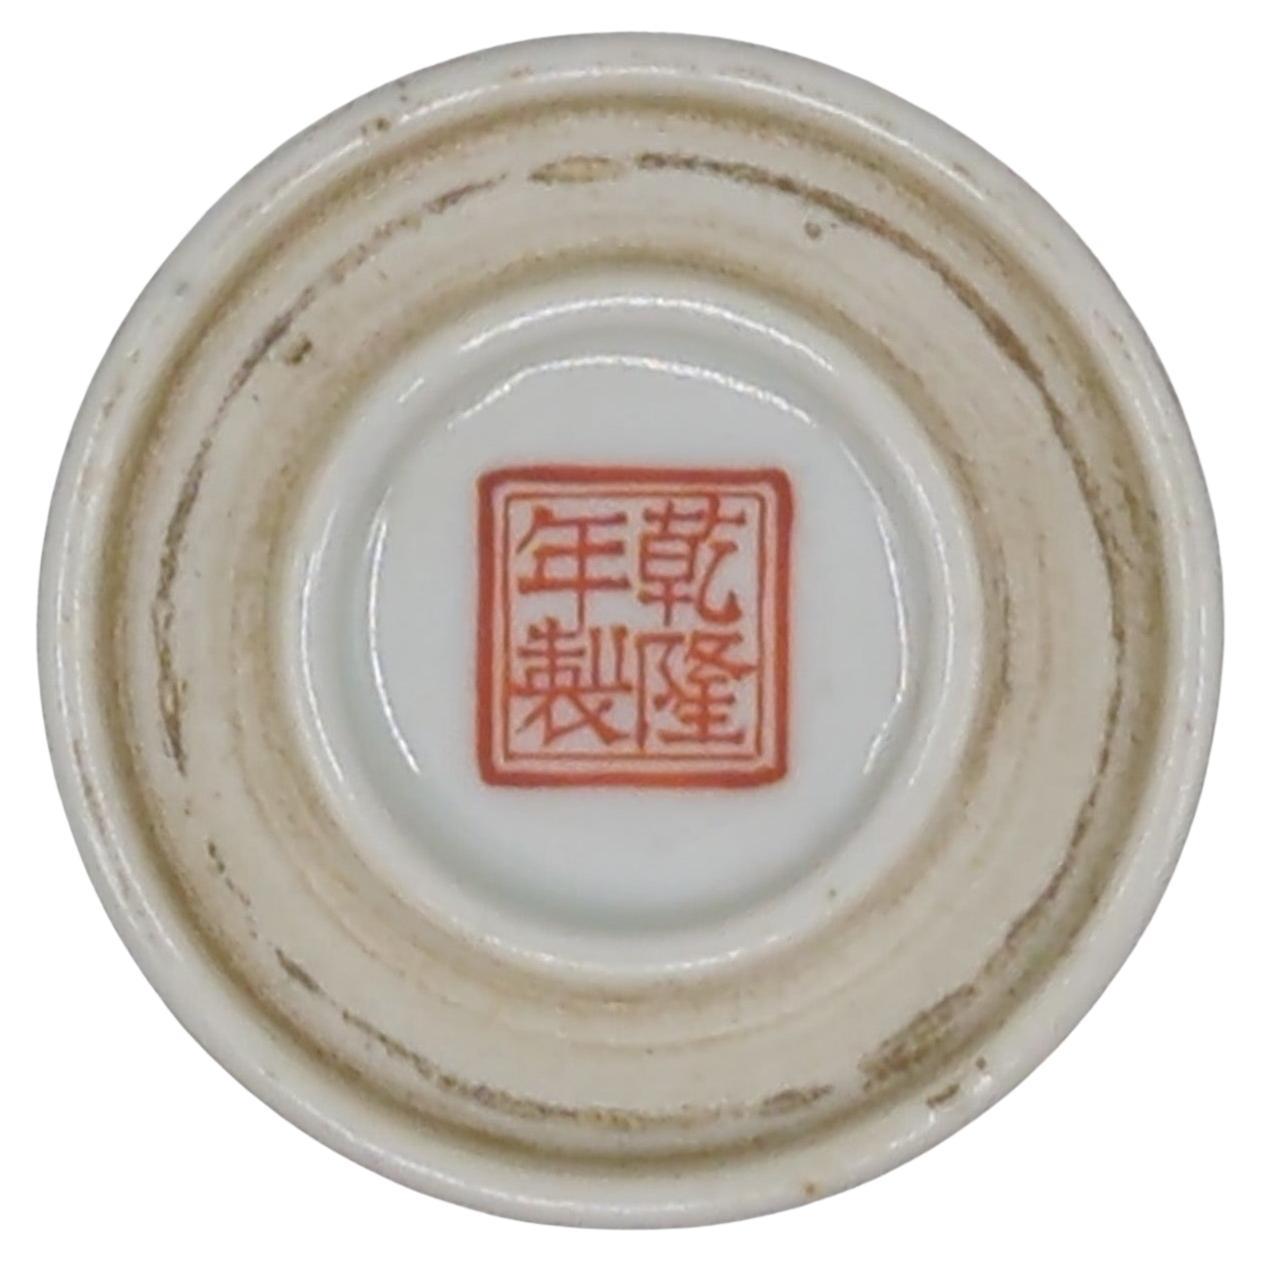 Finest Chinese Famille Rose Fencai Shanshui Cylinder Vase Gilt Rim Early 20th C For Sale 4